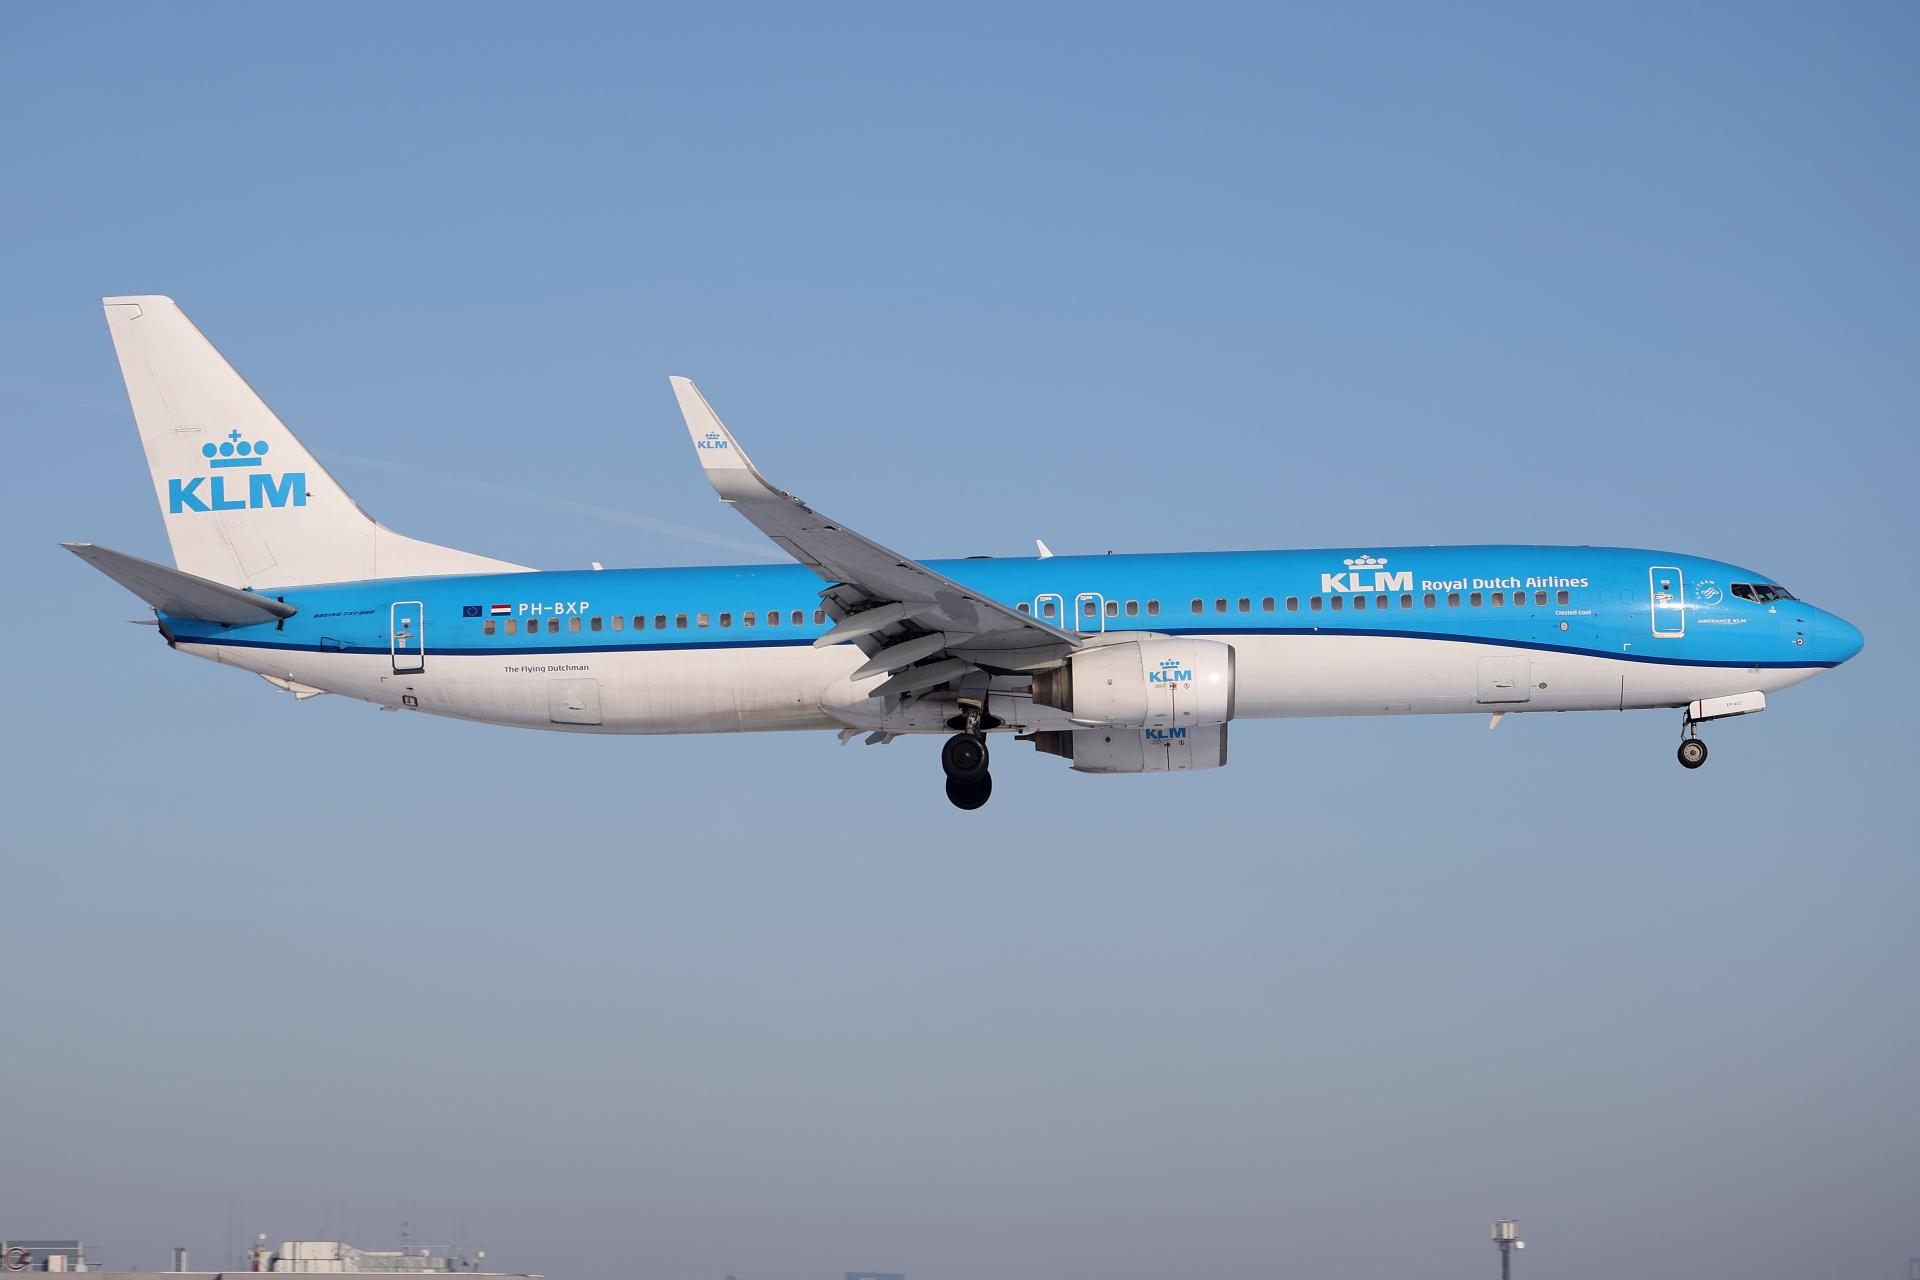 PH-BXP (Aircraft » EPWA Spotting » Boeing 737-900 » KLM Royal Dutch Airlines)